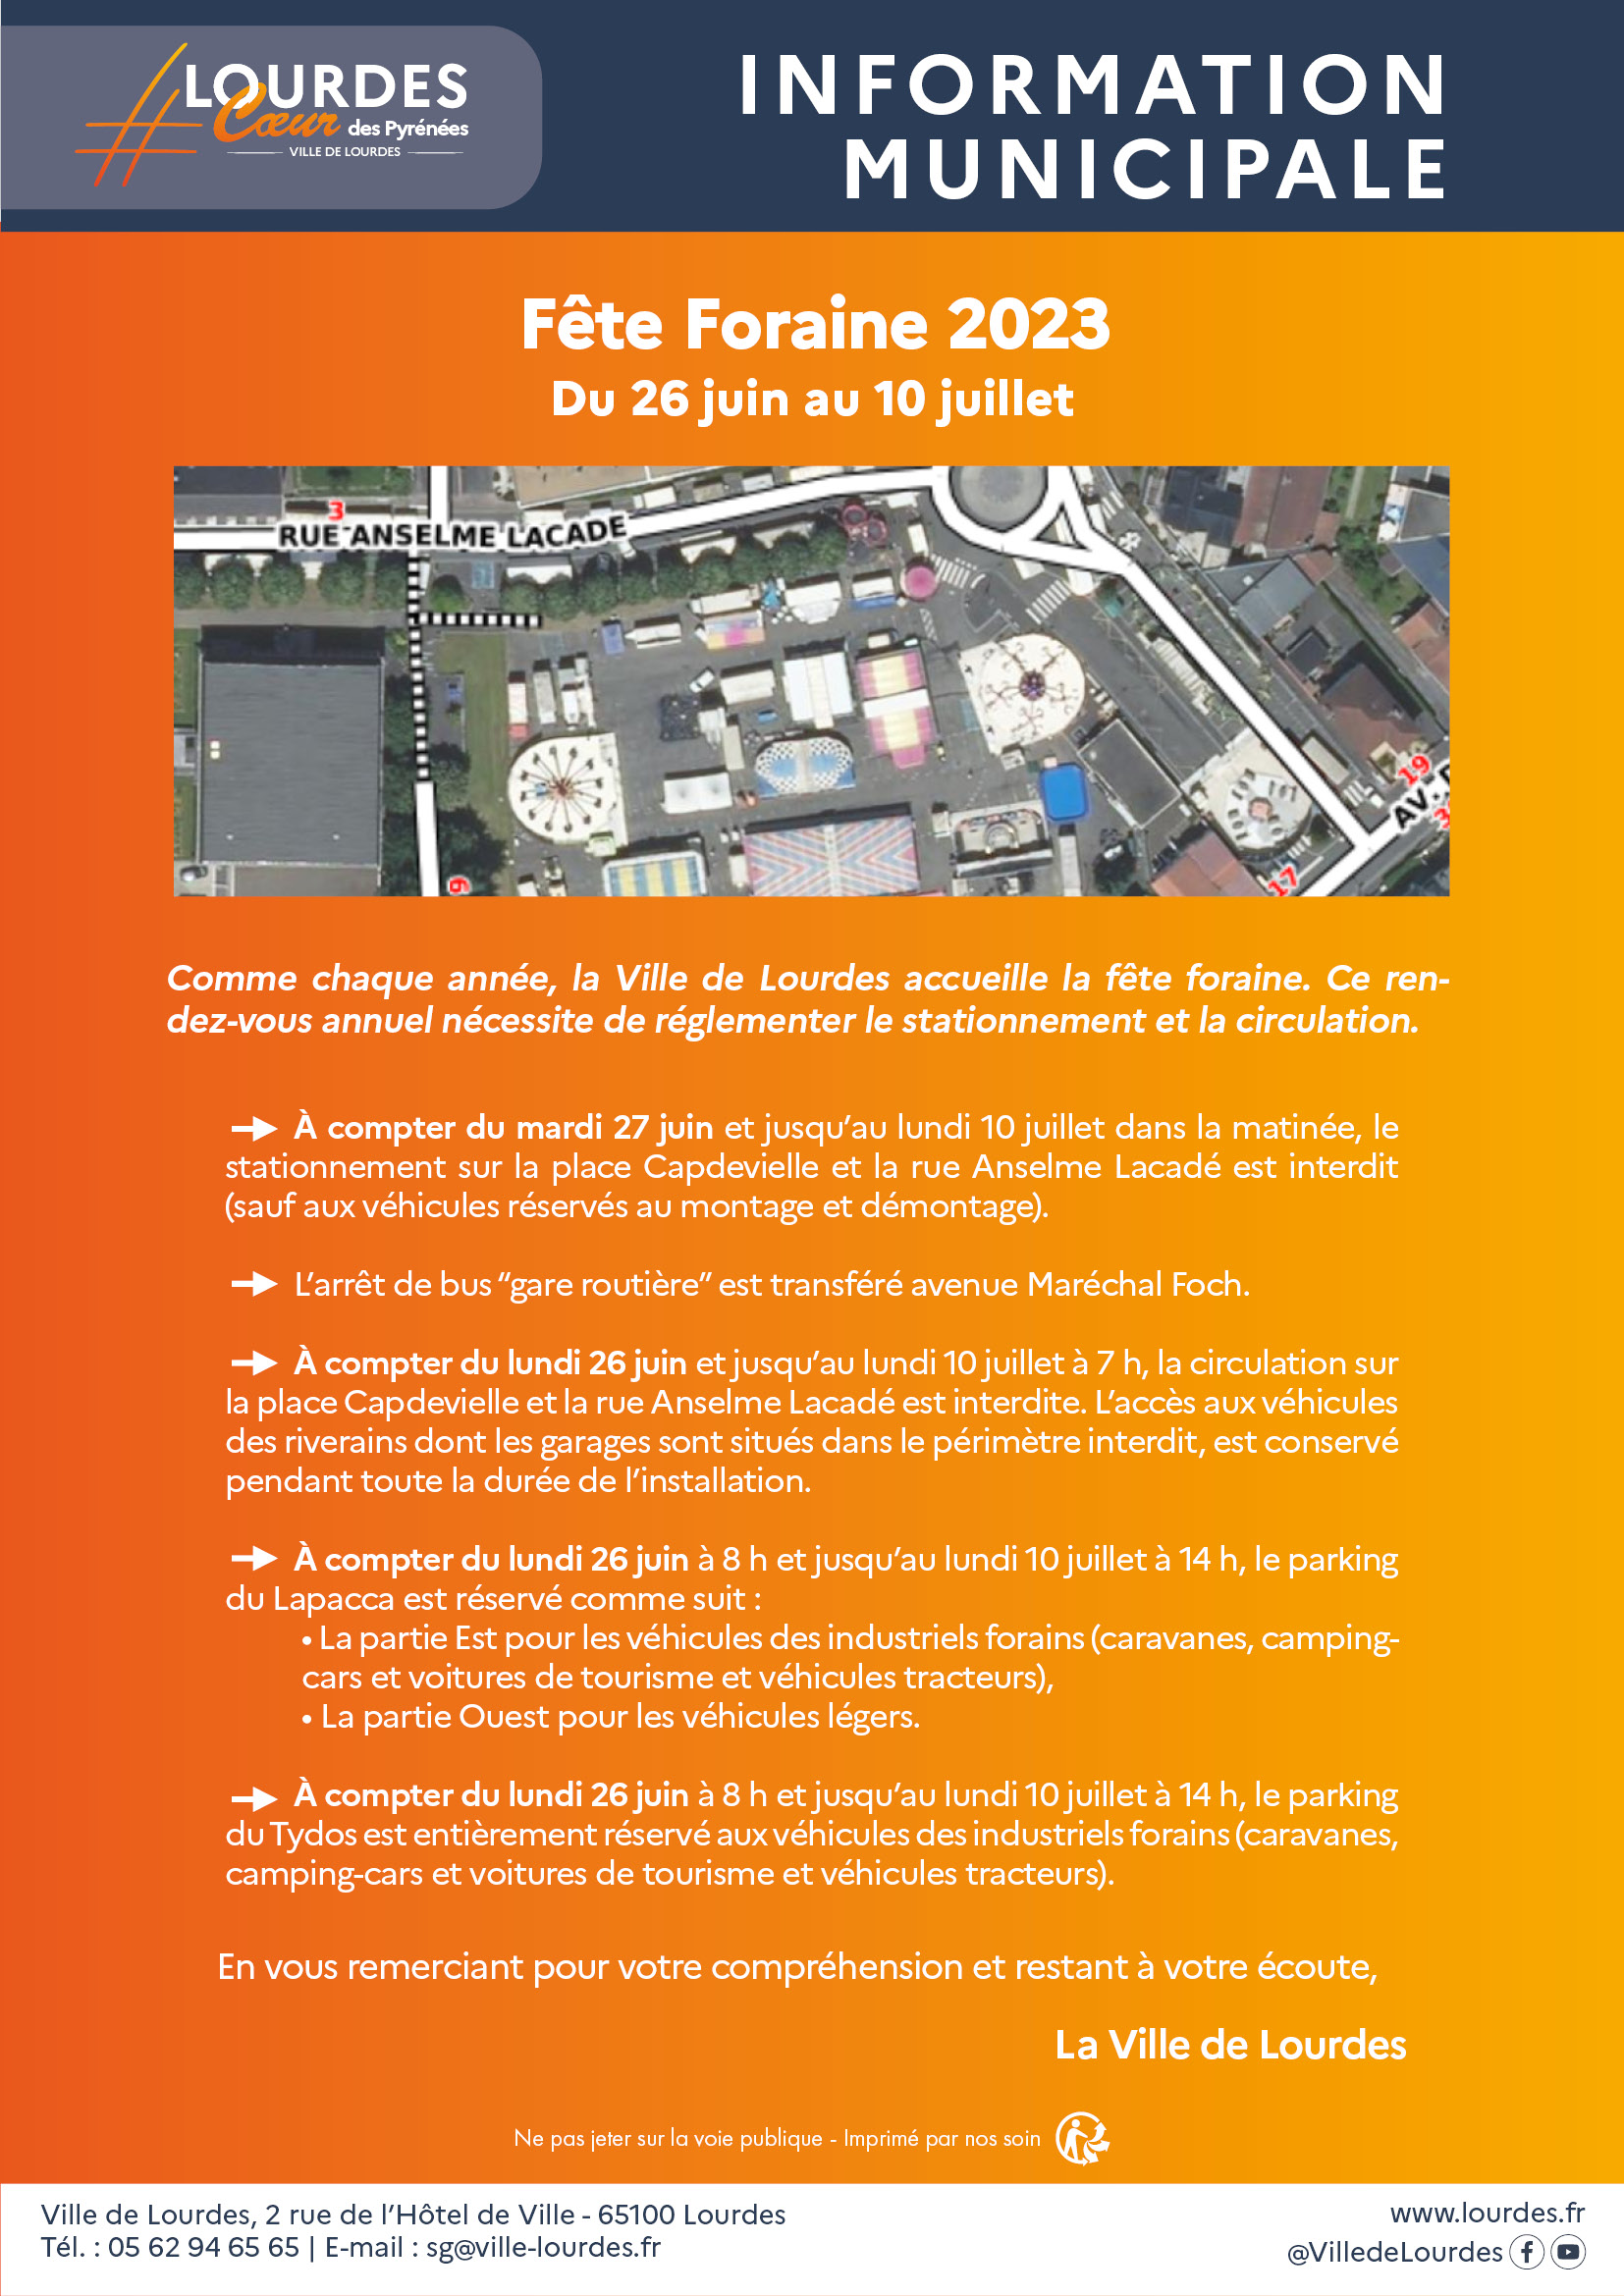 info municipale fete foraine 2023 Lourdes